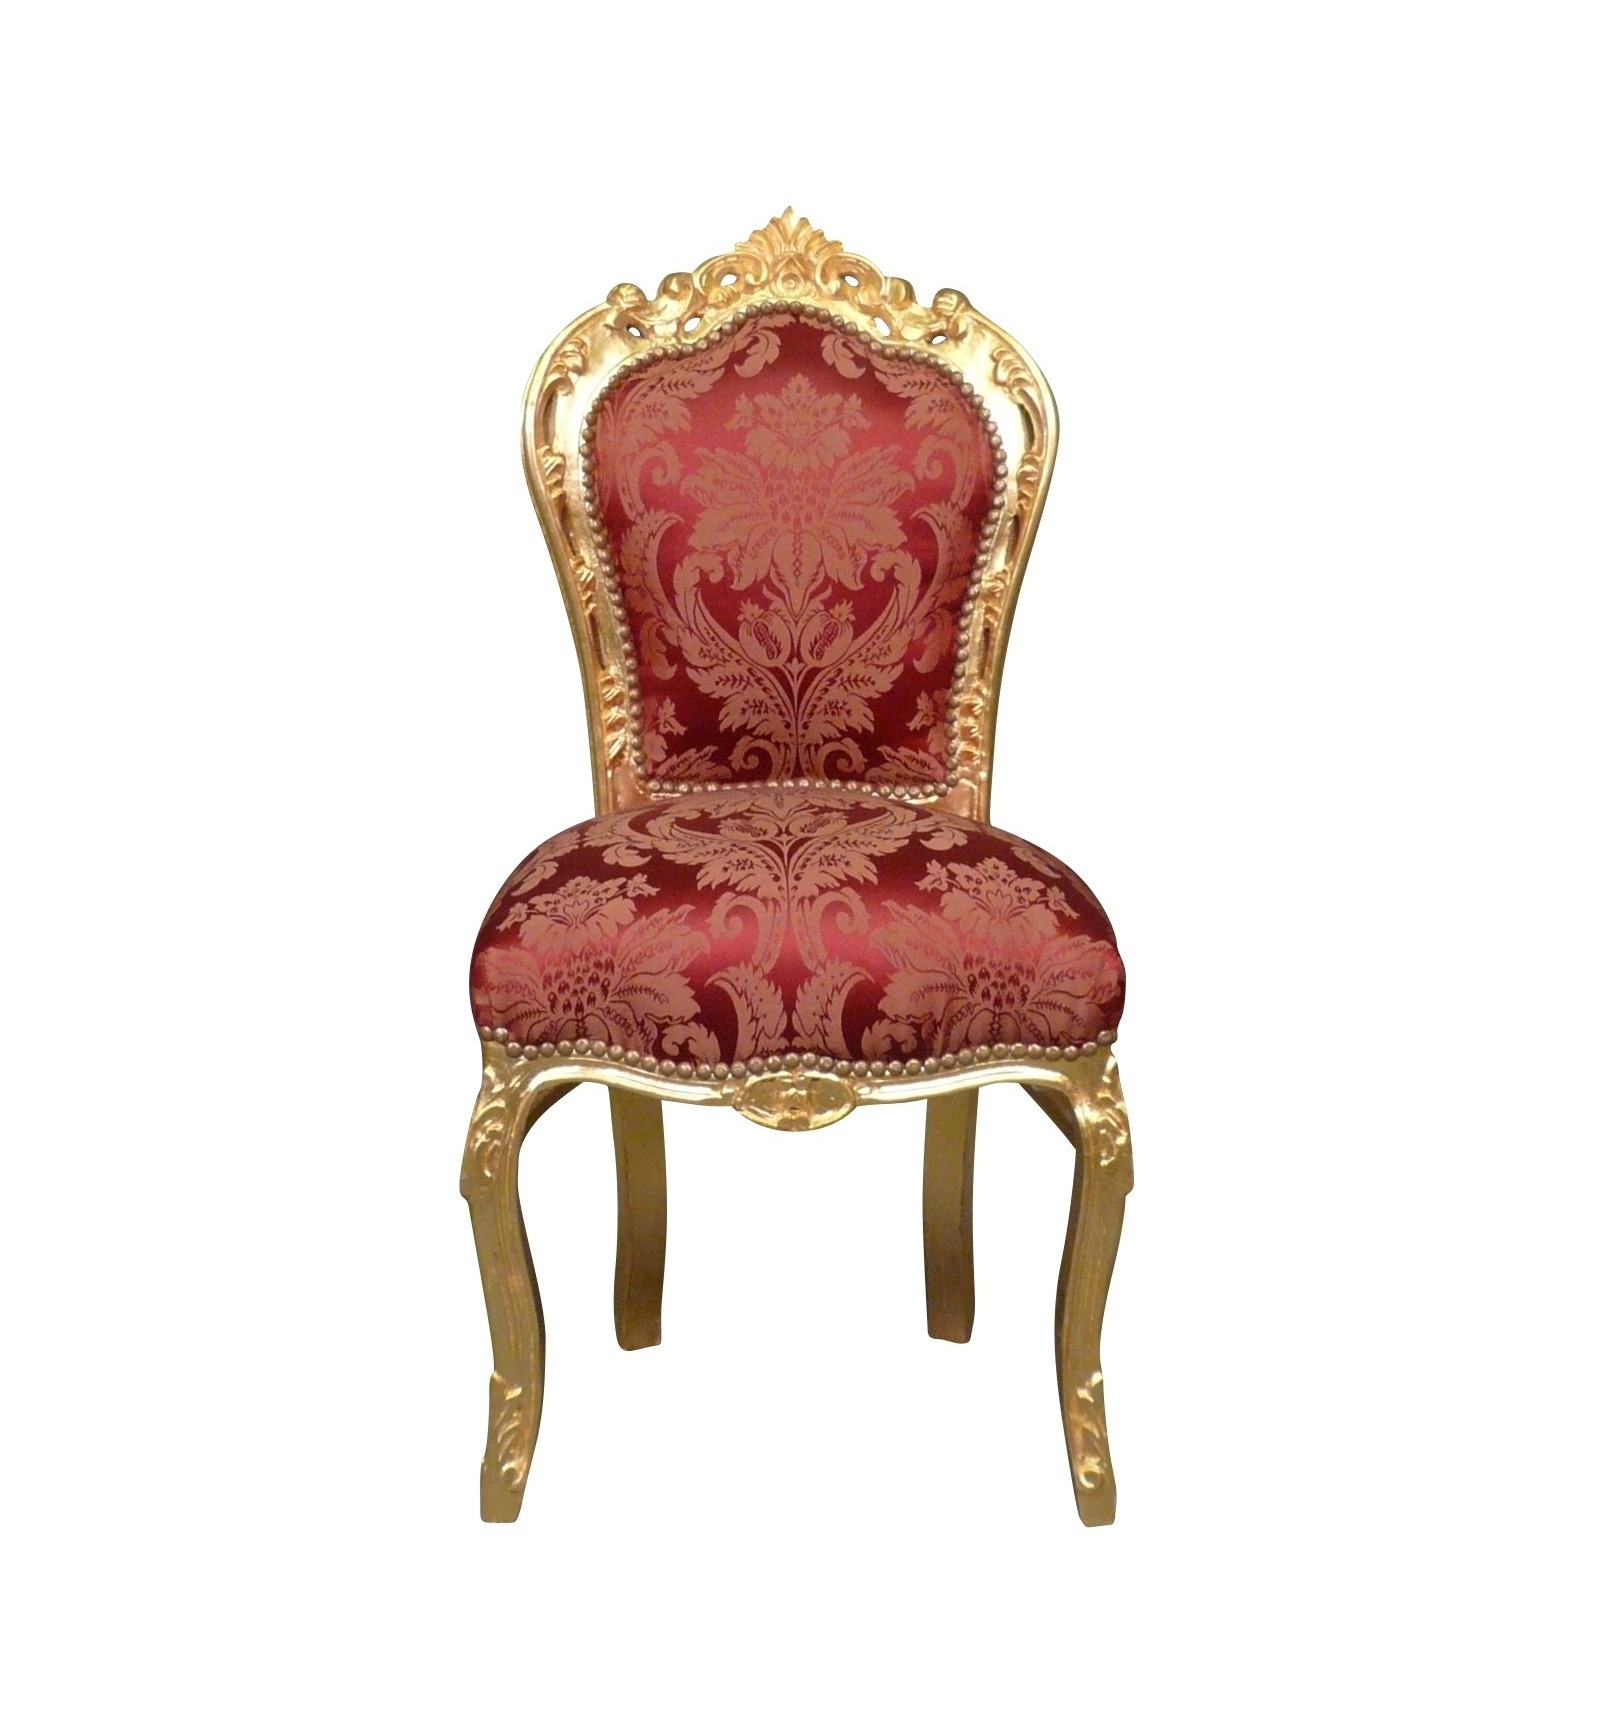 Versterken Gevoelig voor Charlotte Bronte Barokke stoel Rotterdam Rode en gouden hout - Barok meubels